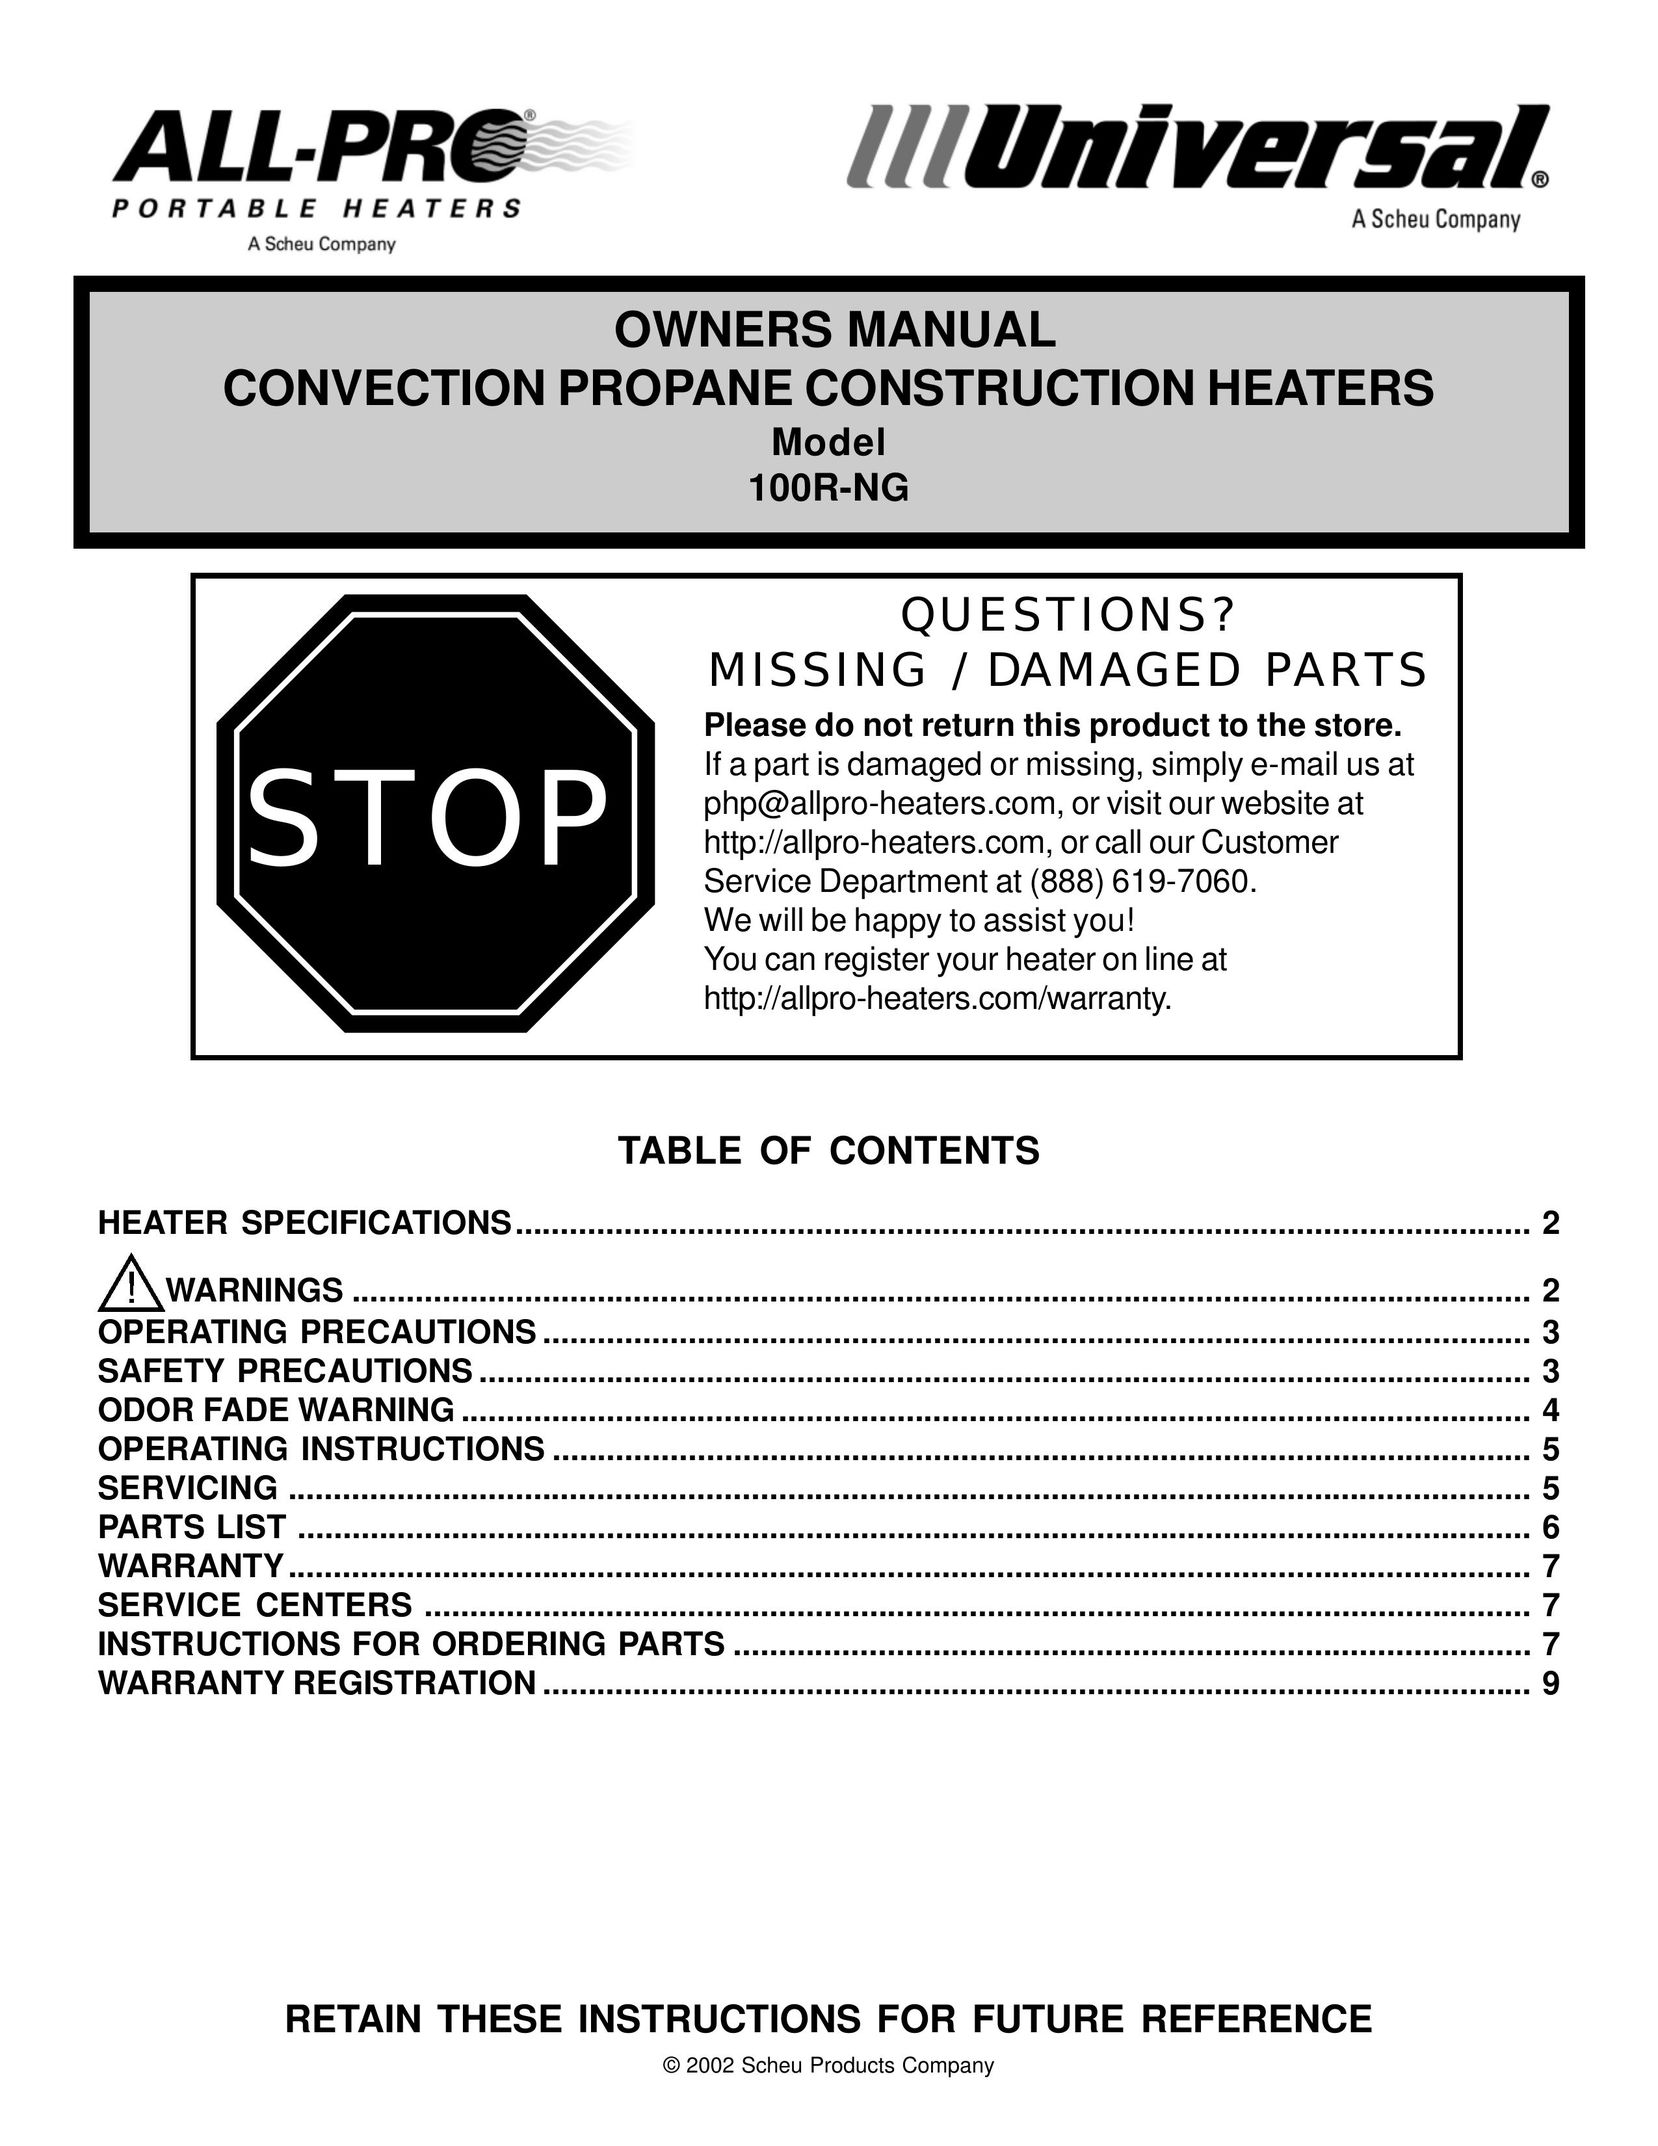 Universal 100R-NG Air Conditioner User Manual